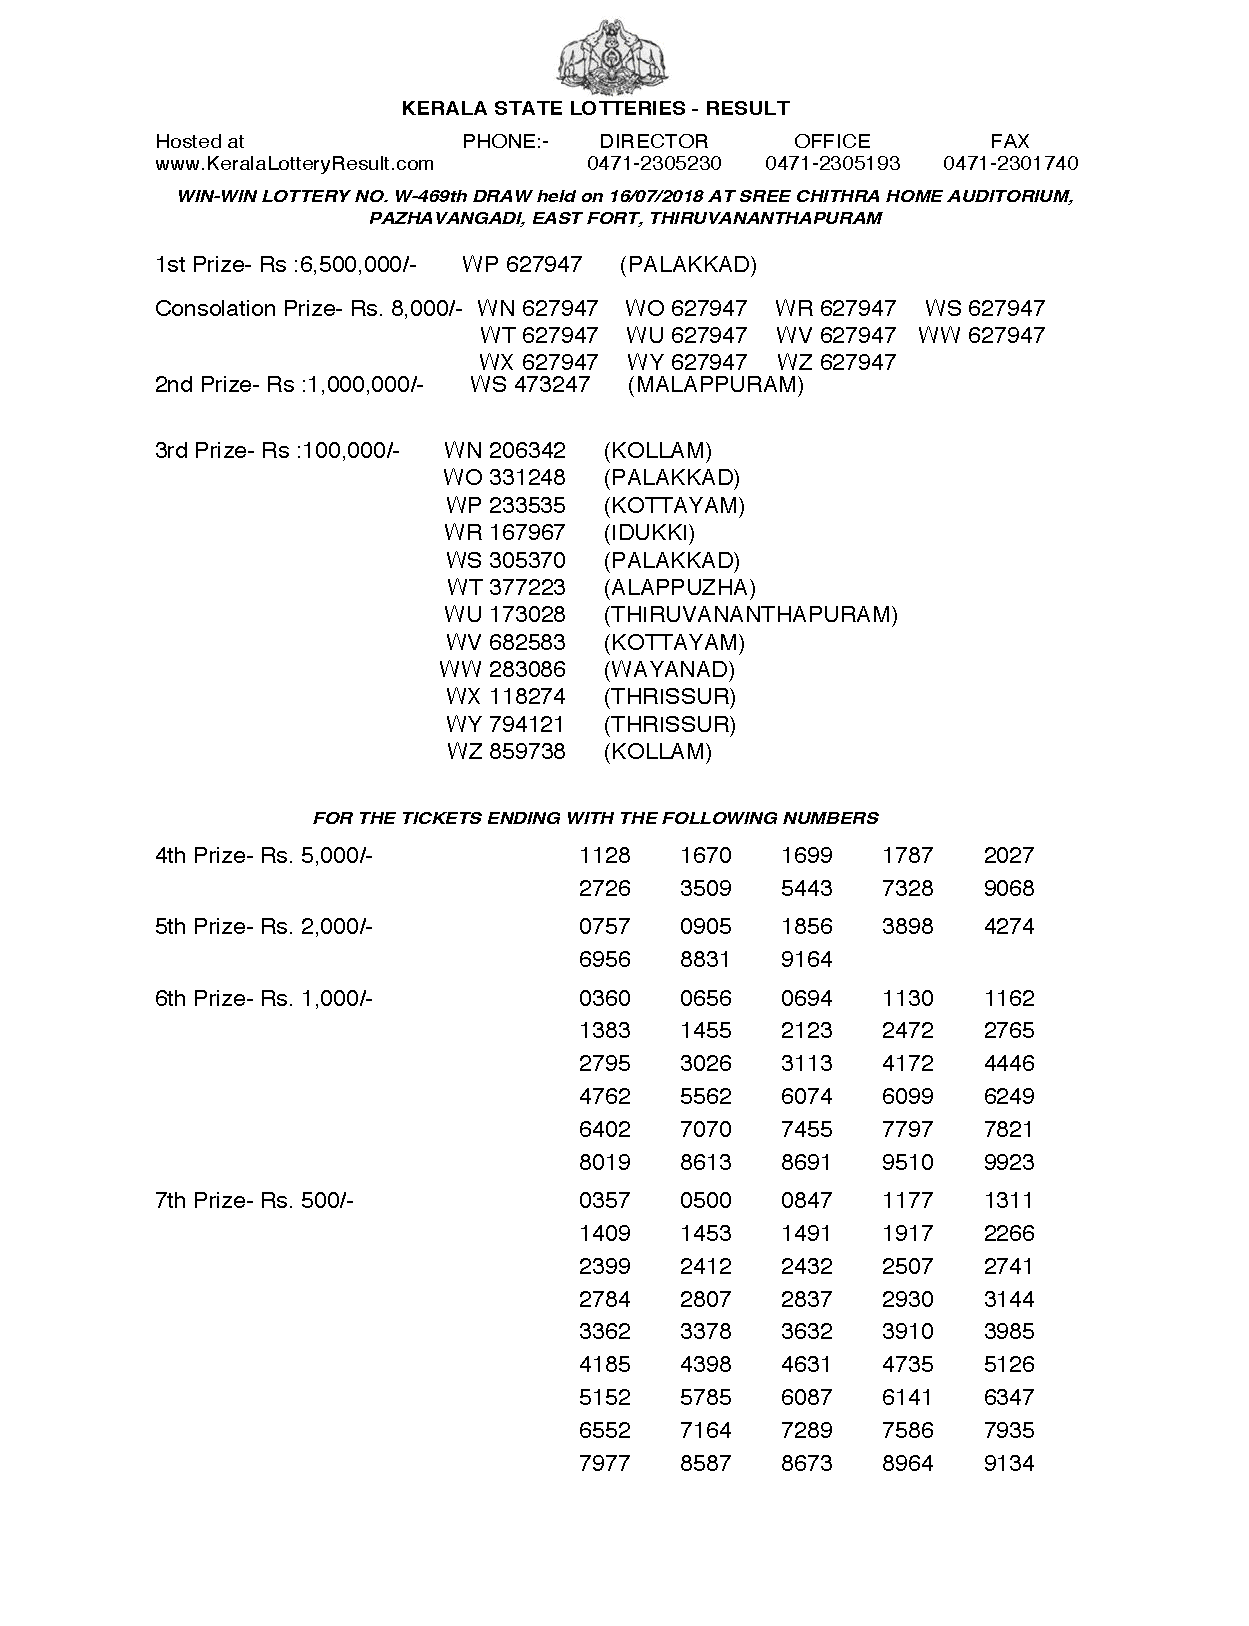 Winwin W469 Kerala Lottery Results Screenshot: Page 1